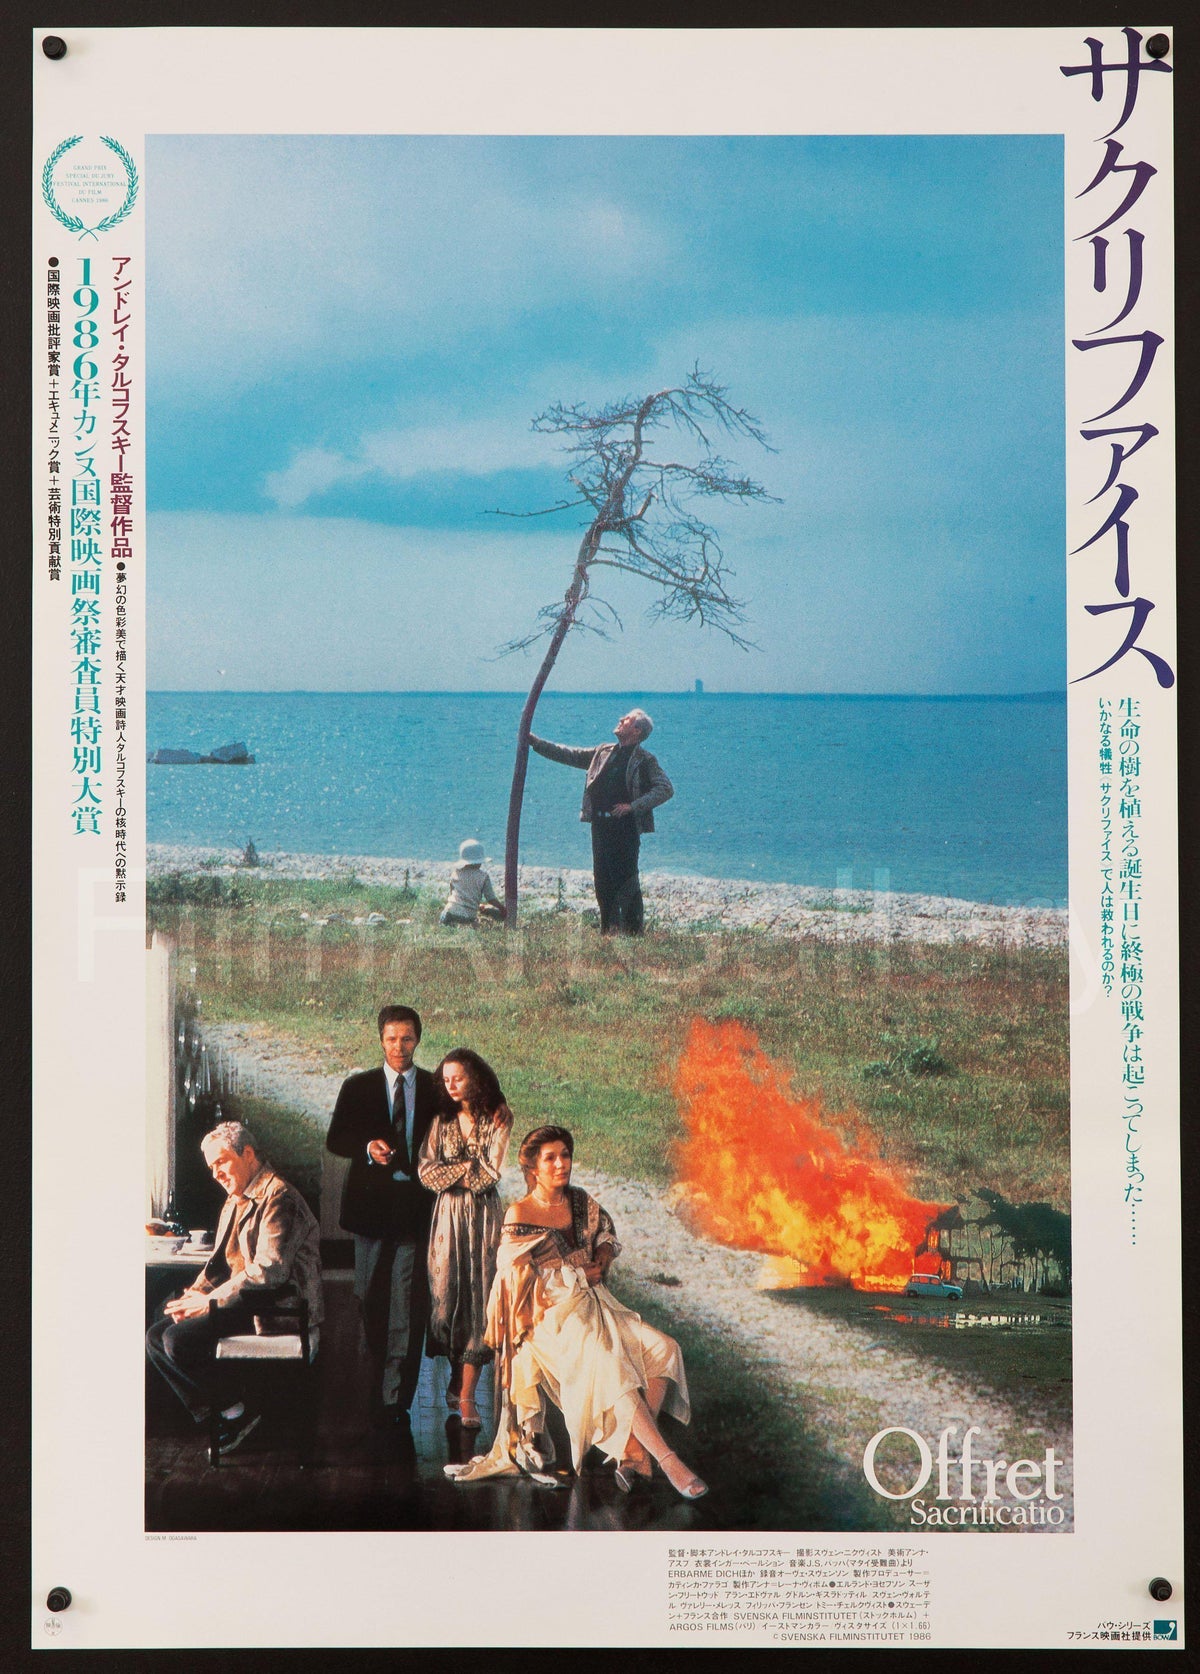 The Sacrifice (Offret) Japanese 1 Panel (20x29) Original Vintage Movie Poster